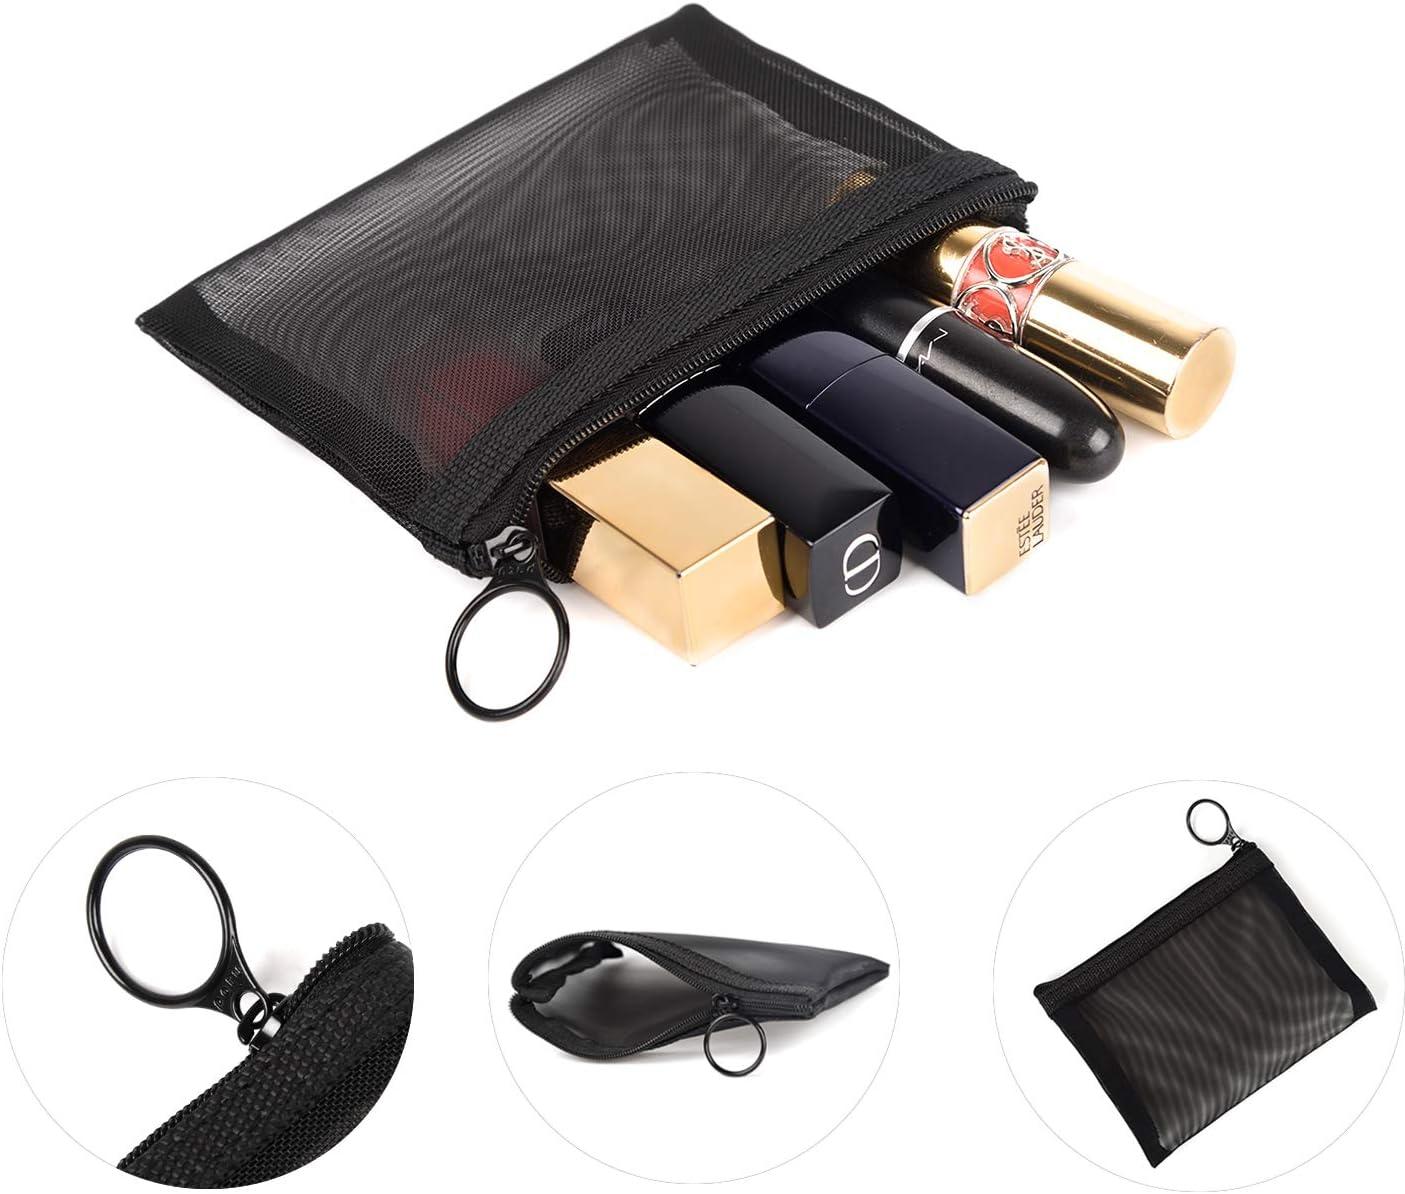 Patu Mini Zipper Mesh Bags, 4 x 5, Size S / A7, 5 Pieces, Beauty